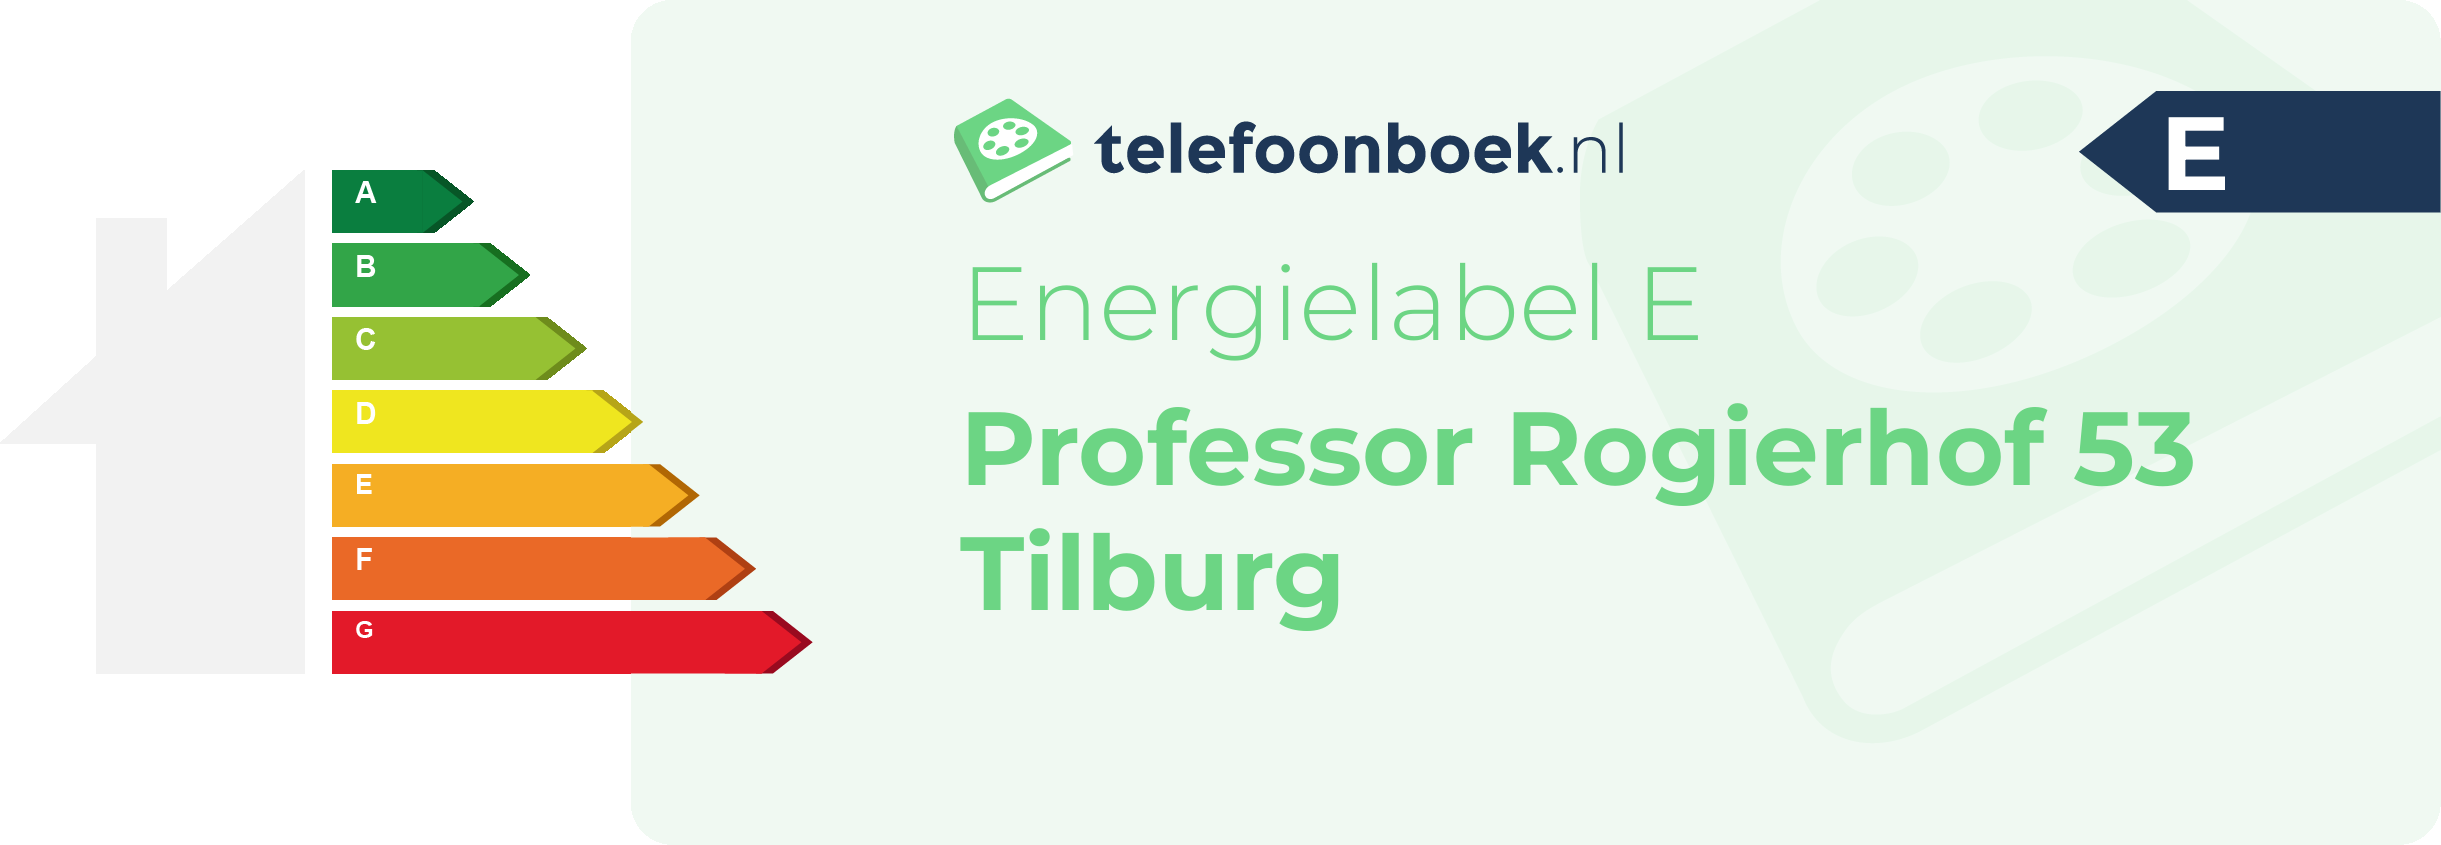 Energielabel Professor Rogierhof 53 Tilburg